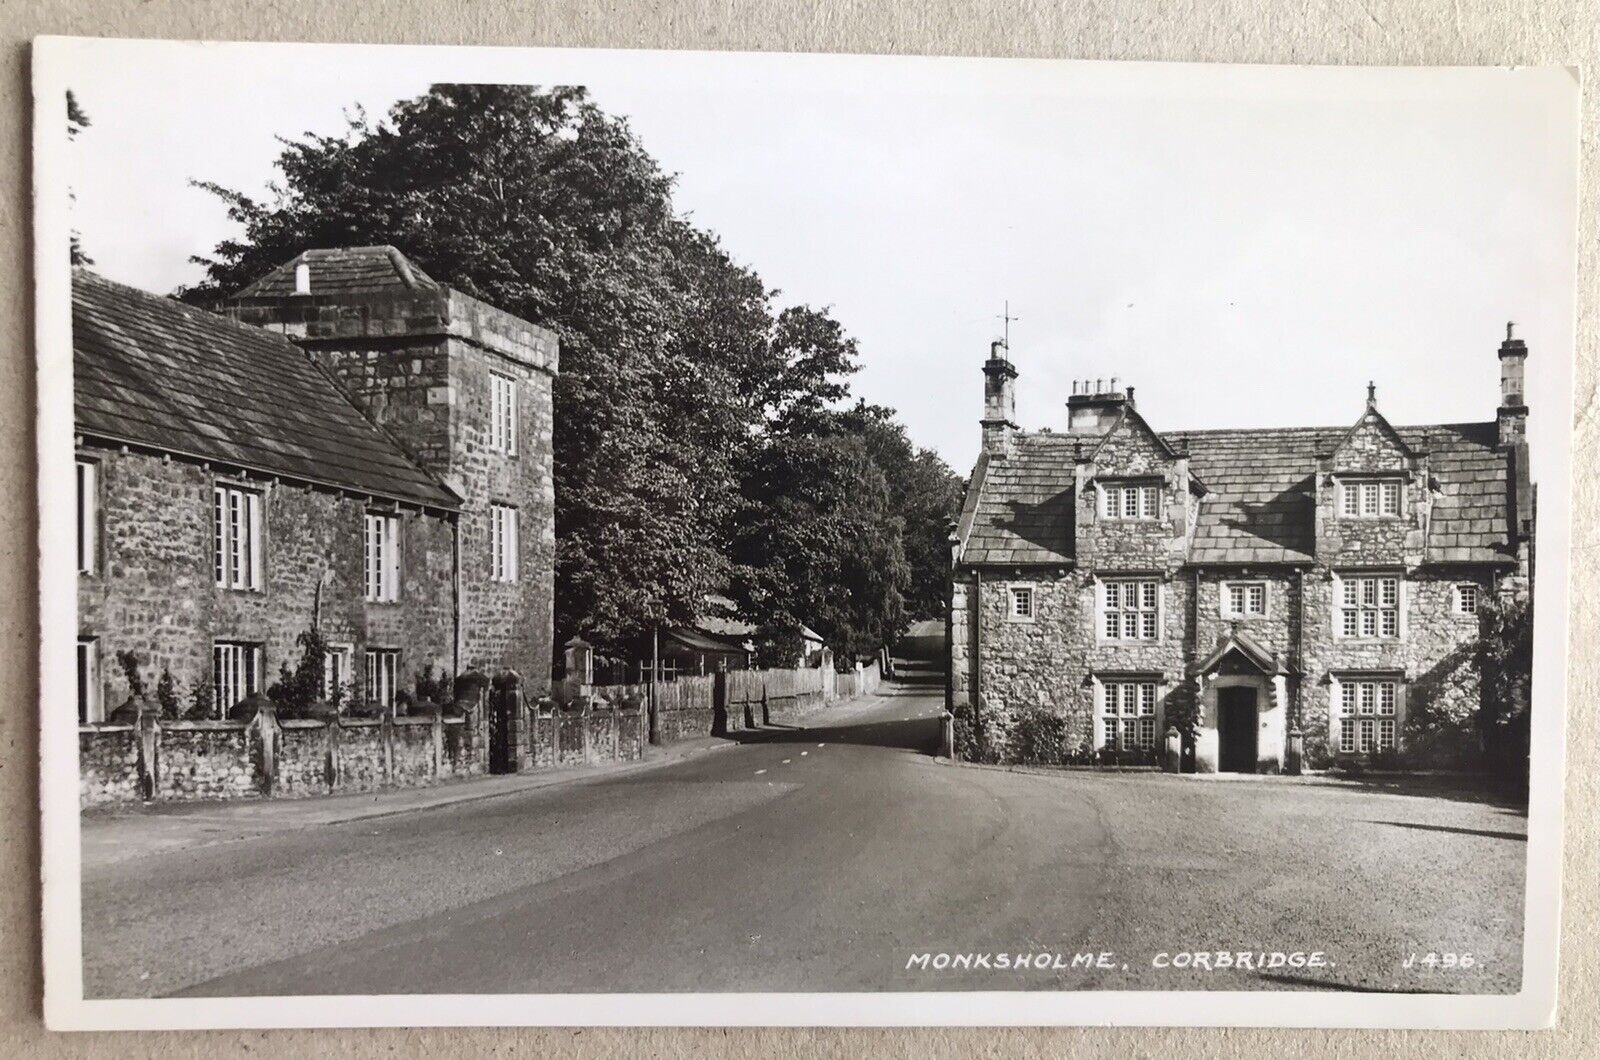 Corbridge - Monksholme - Northumberland - A Vintage RP Service